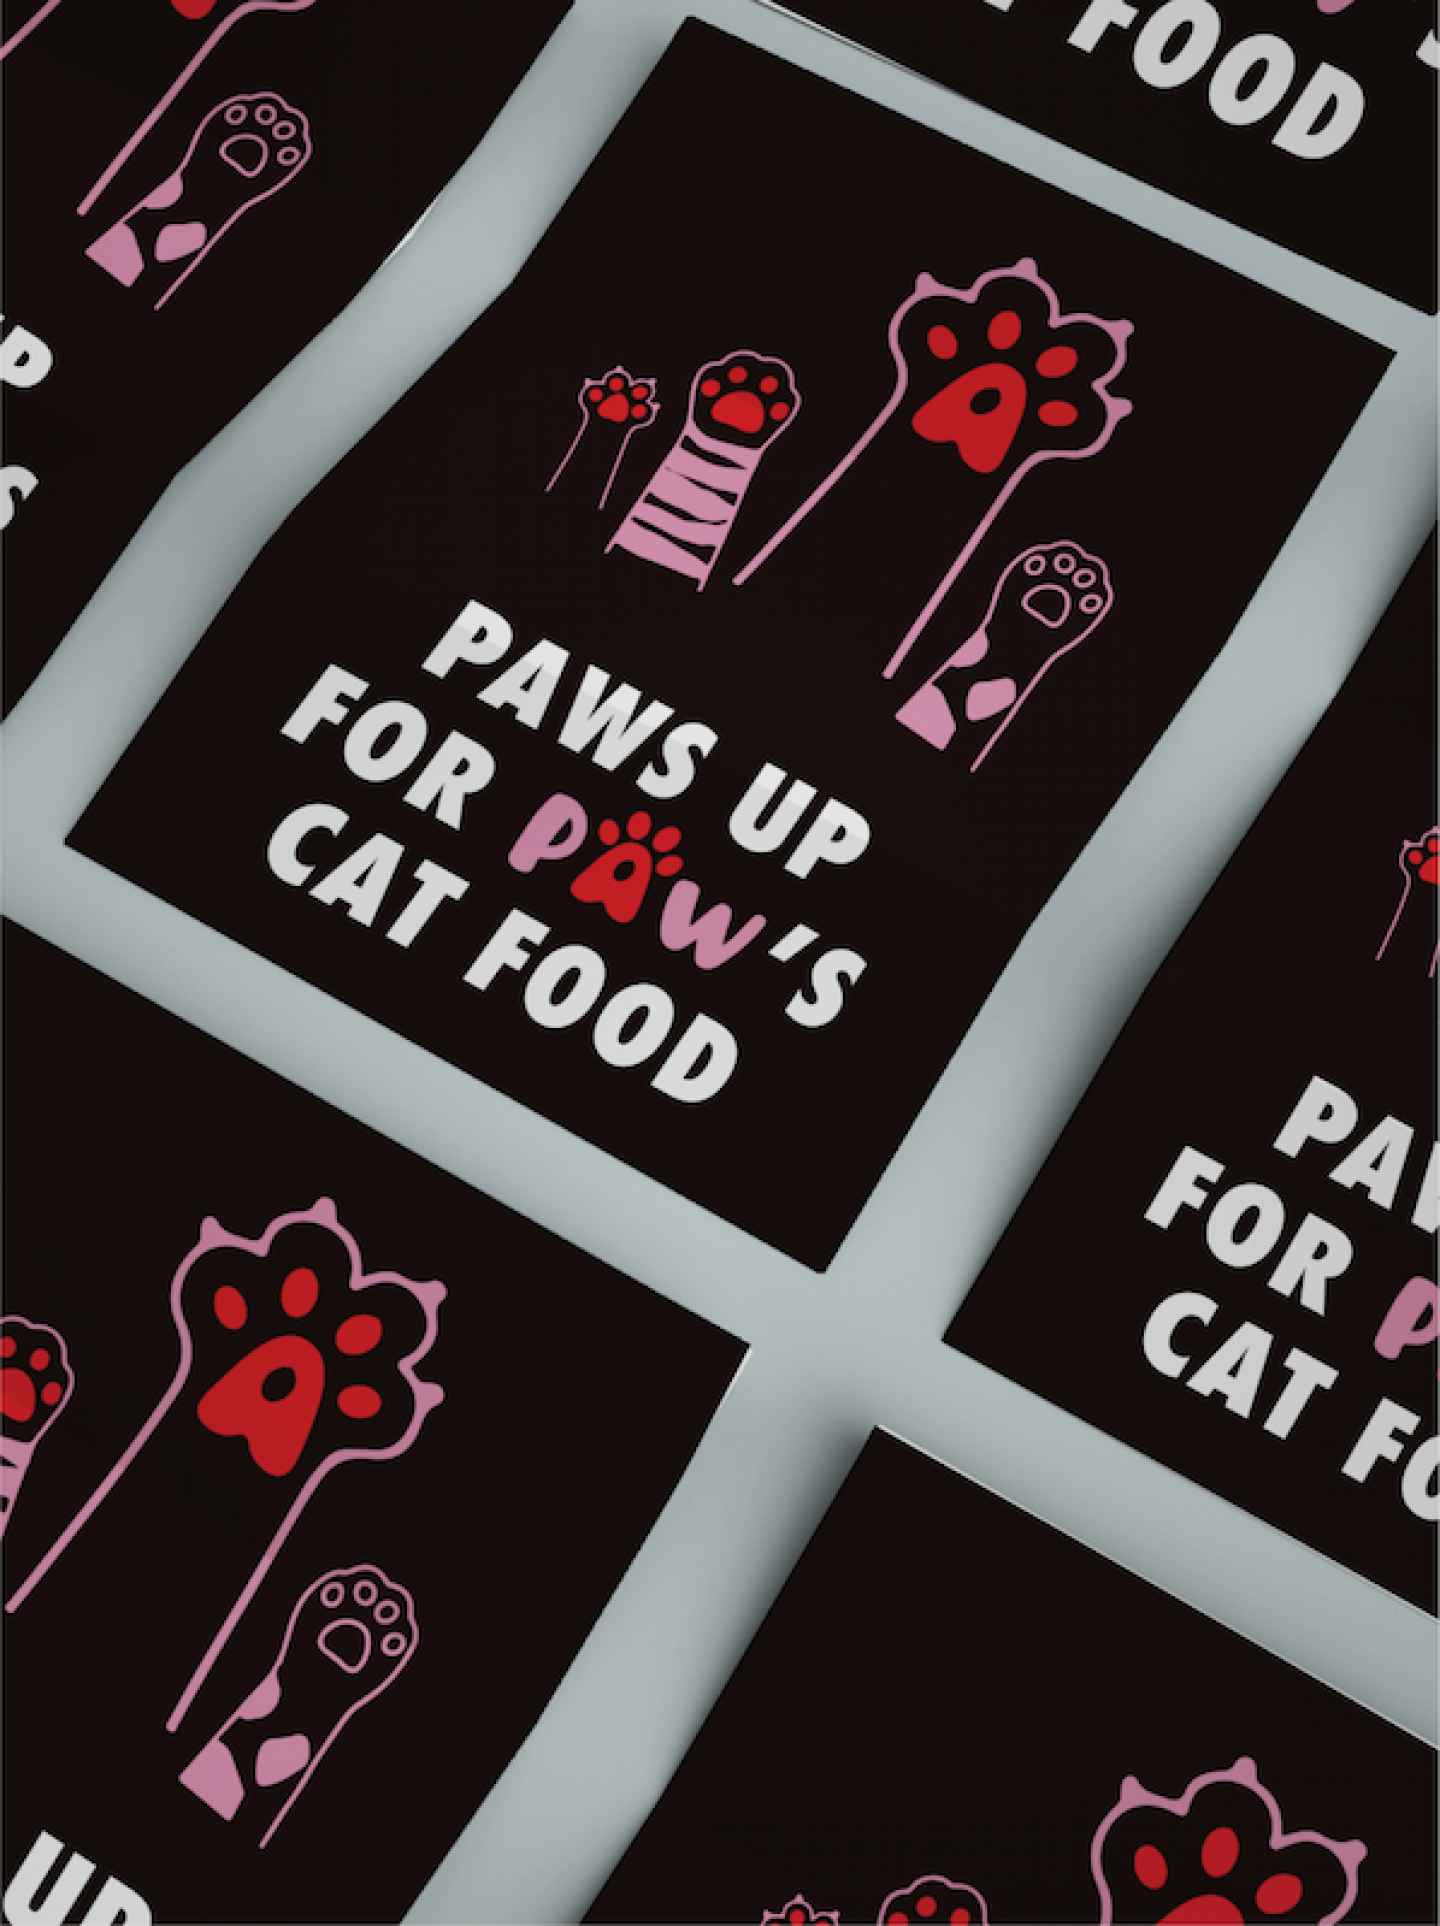 PAW CAT FOOD